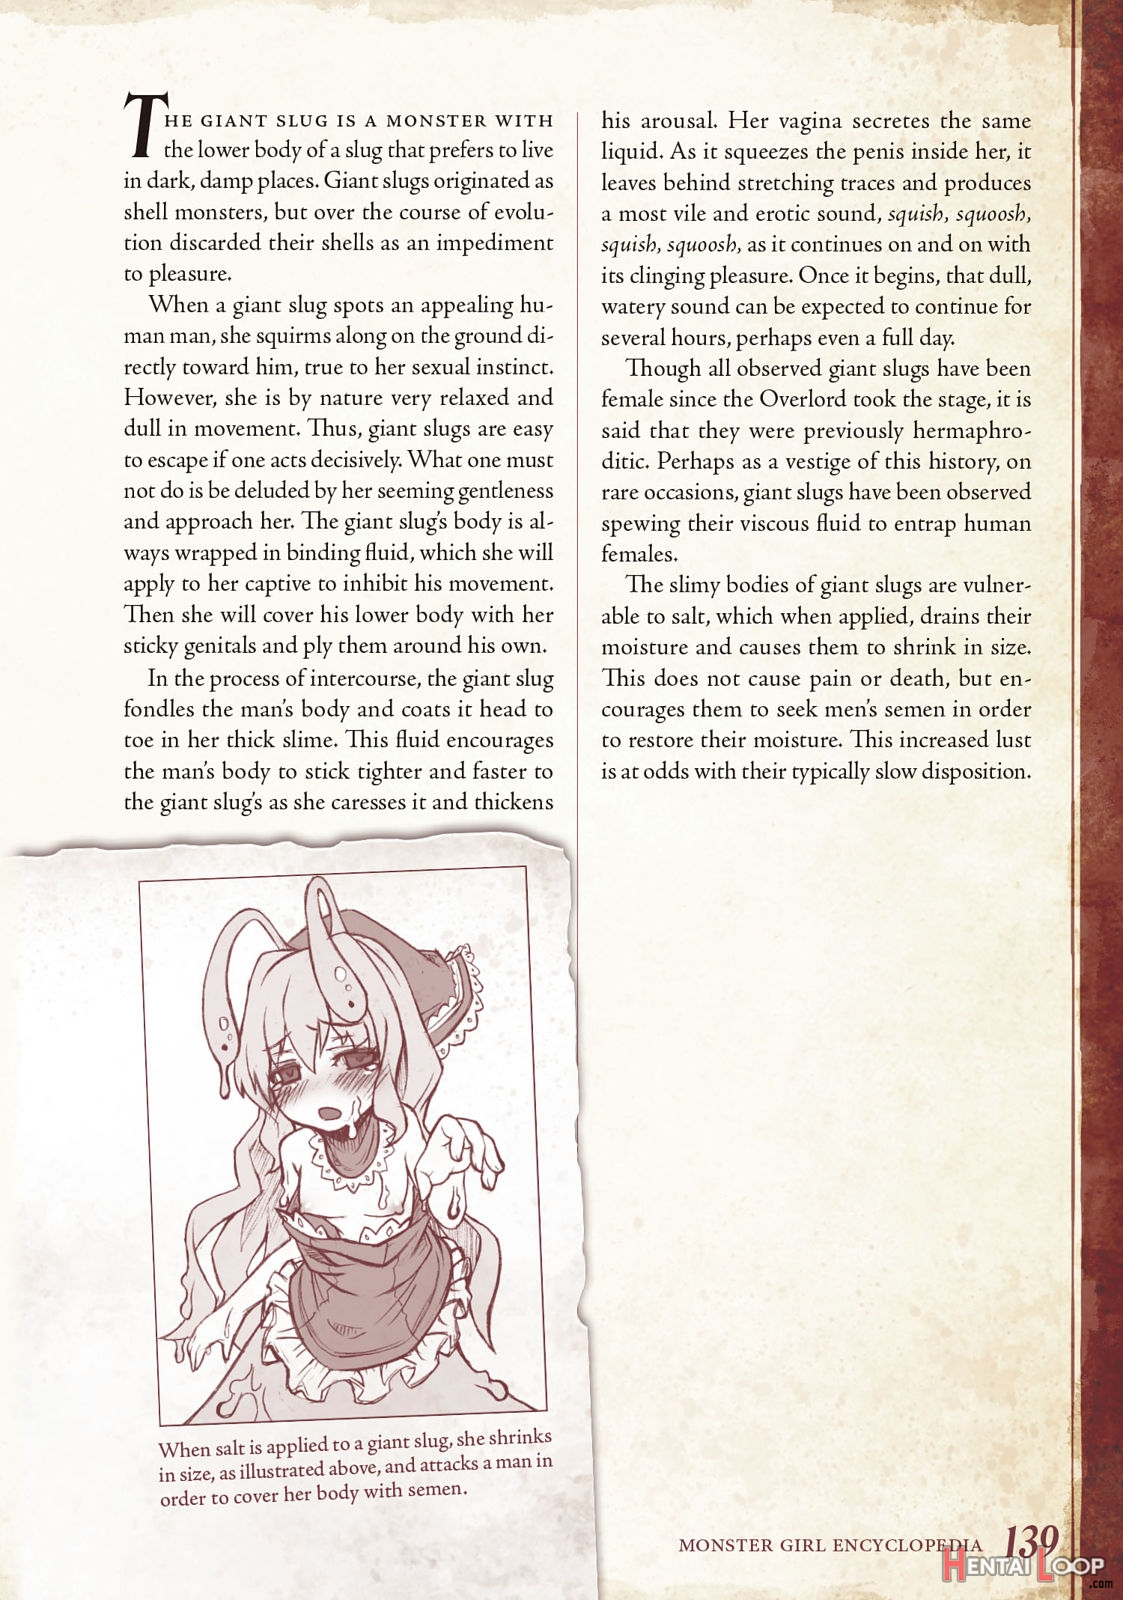 Monster Girl Encyclopedia Vol. 1 page 140